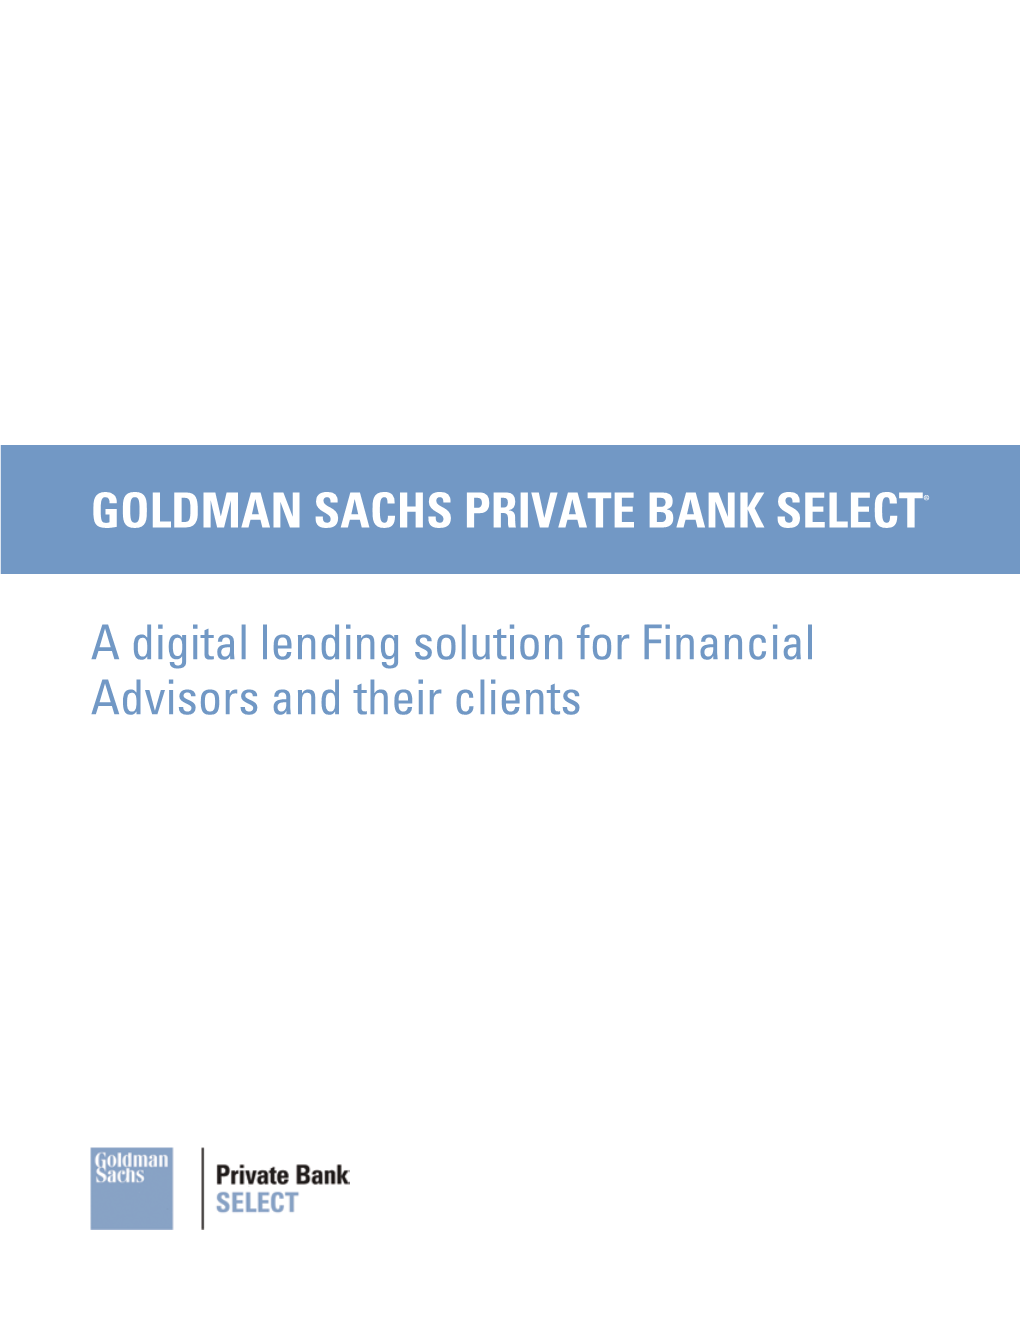 GOLDMAN SACHS PRIVATE BANK SELECT® a Digital Lending Solution